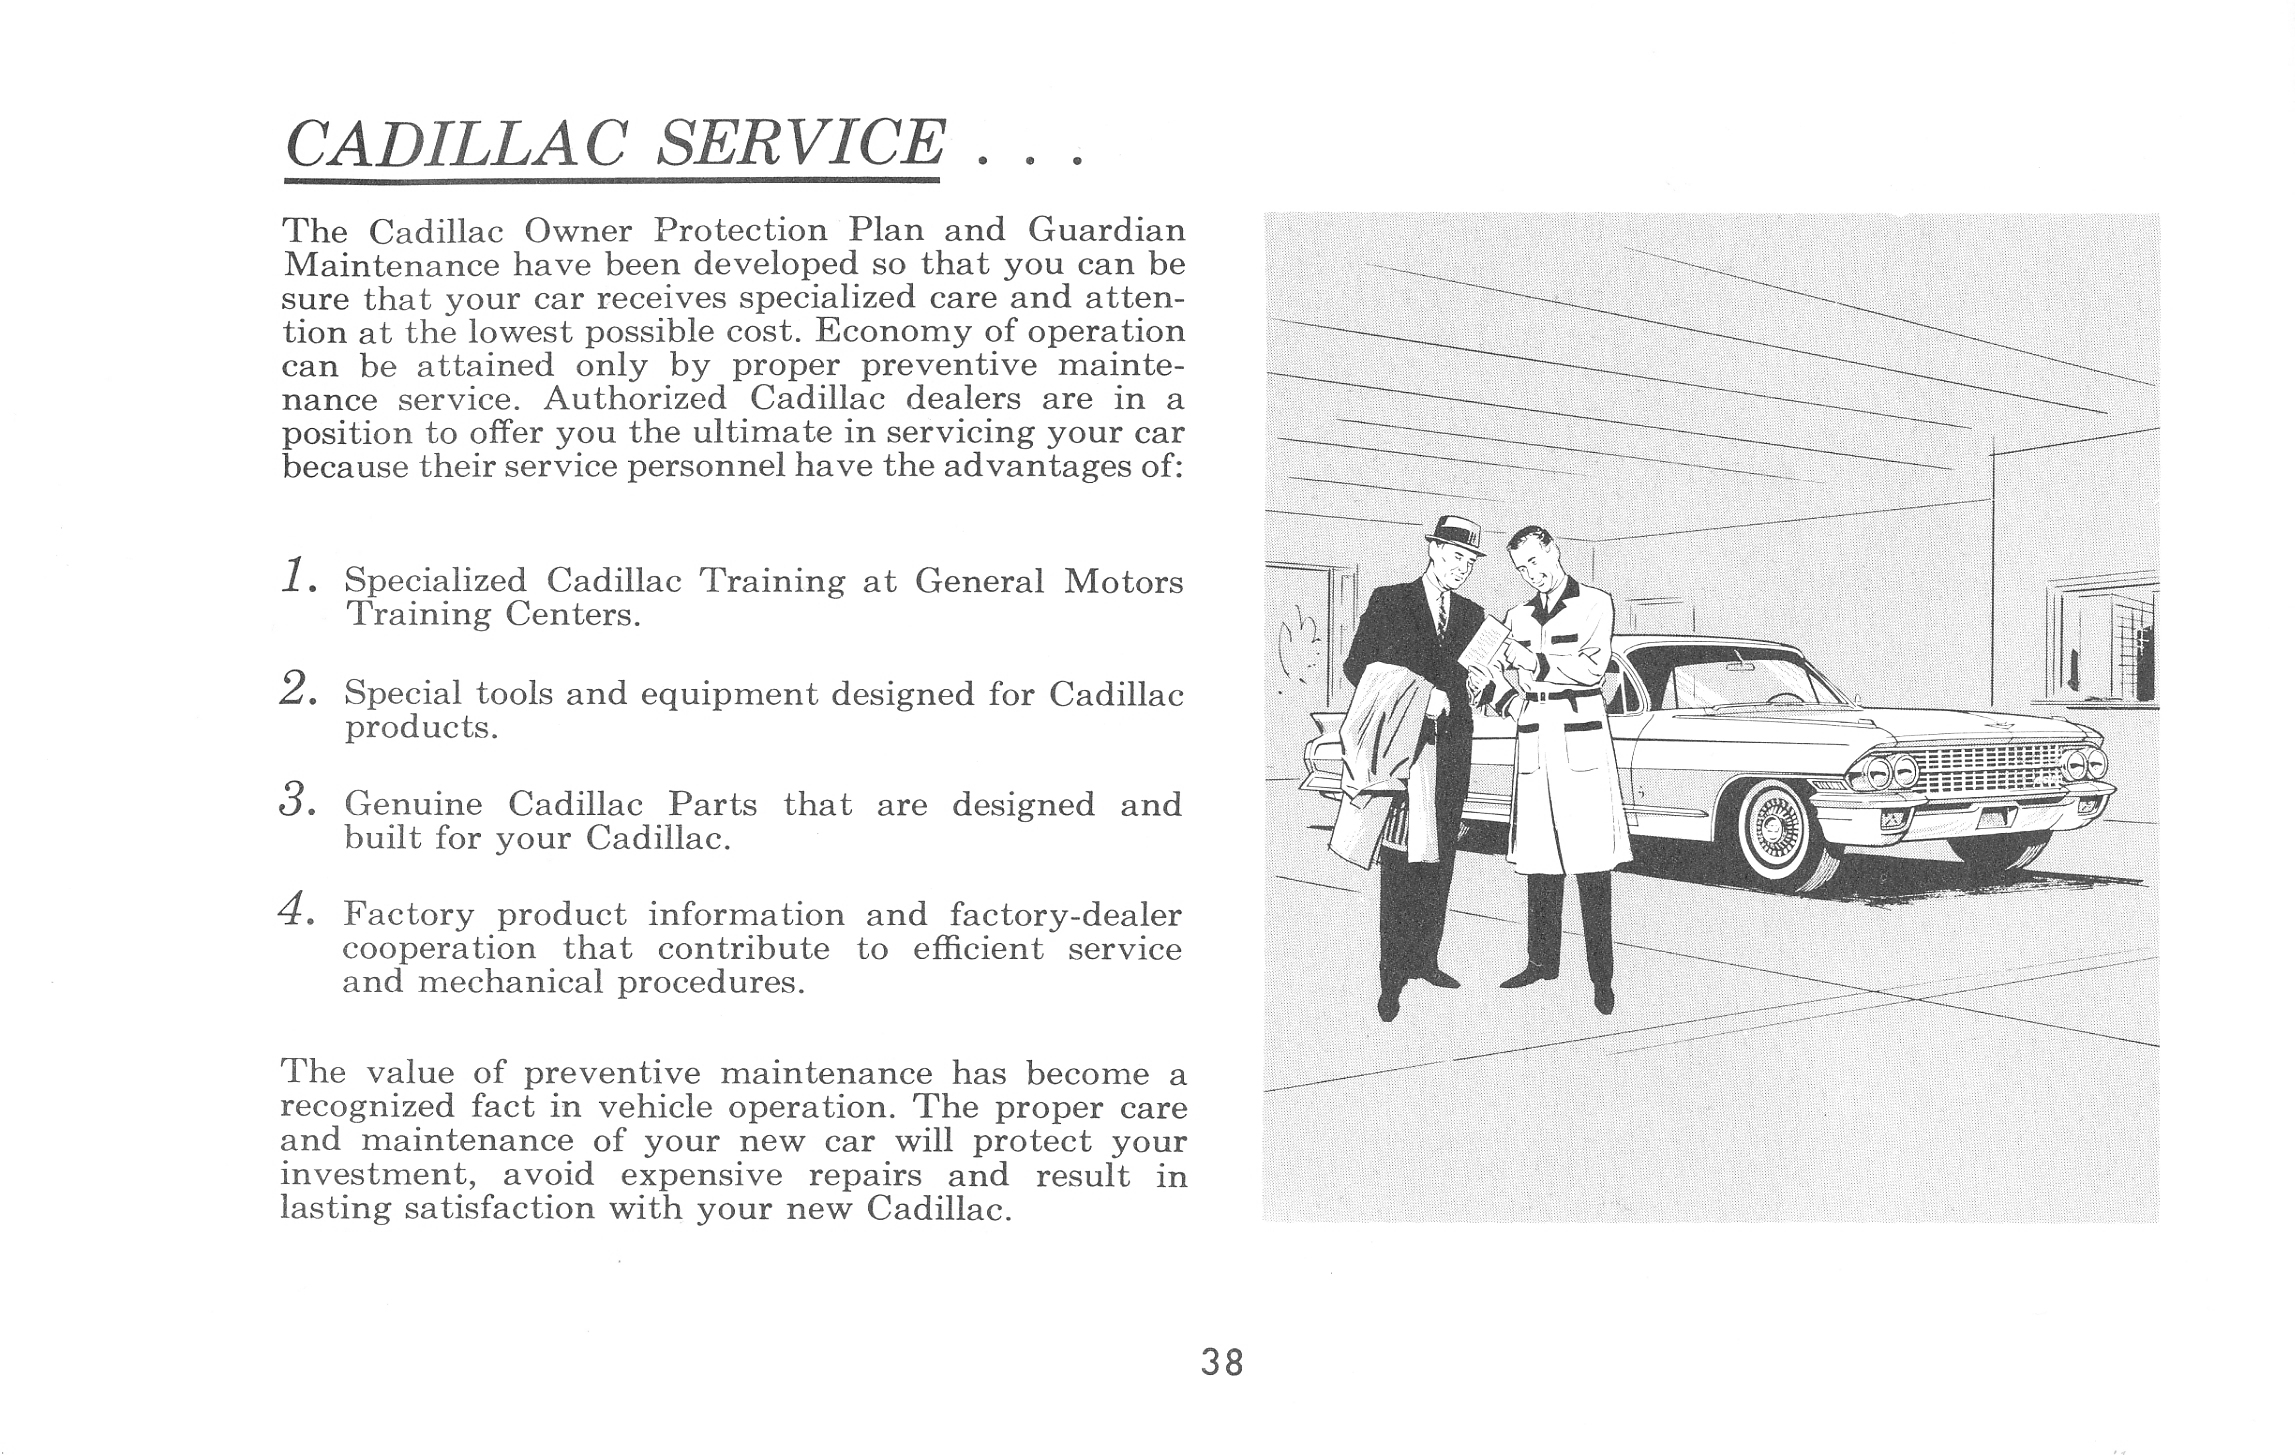 n_1962 Cadillac Owner's Manual-Page 38.jpg